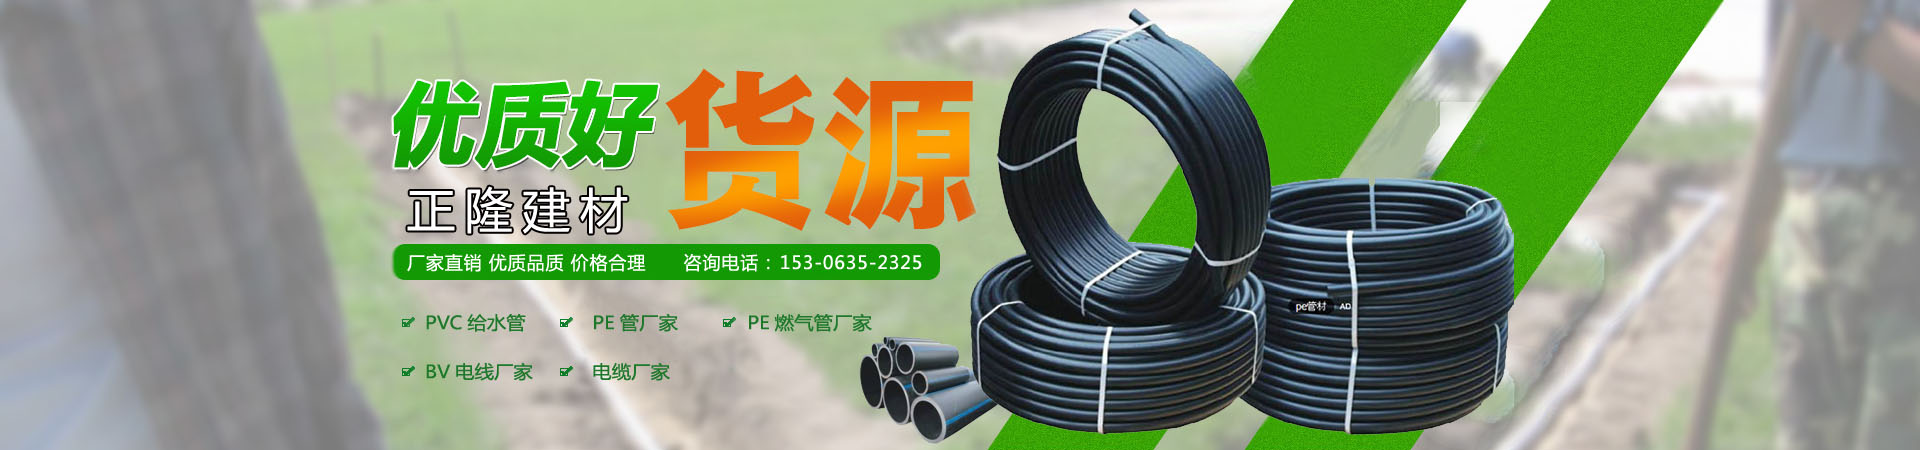 PVC给水管厂家、PE管厂家、PE燃气管厂家、BV电线厂家、电缆厂家